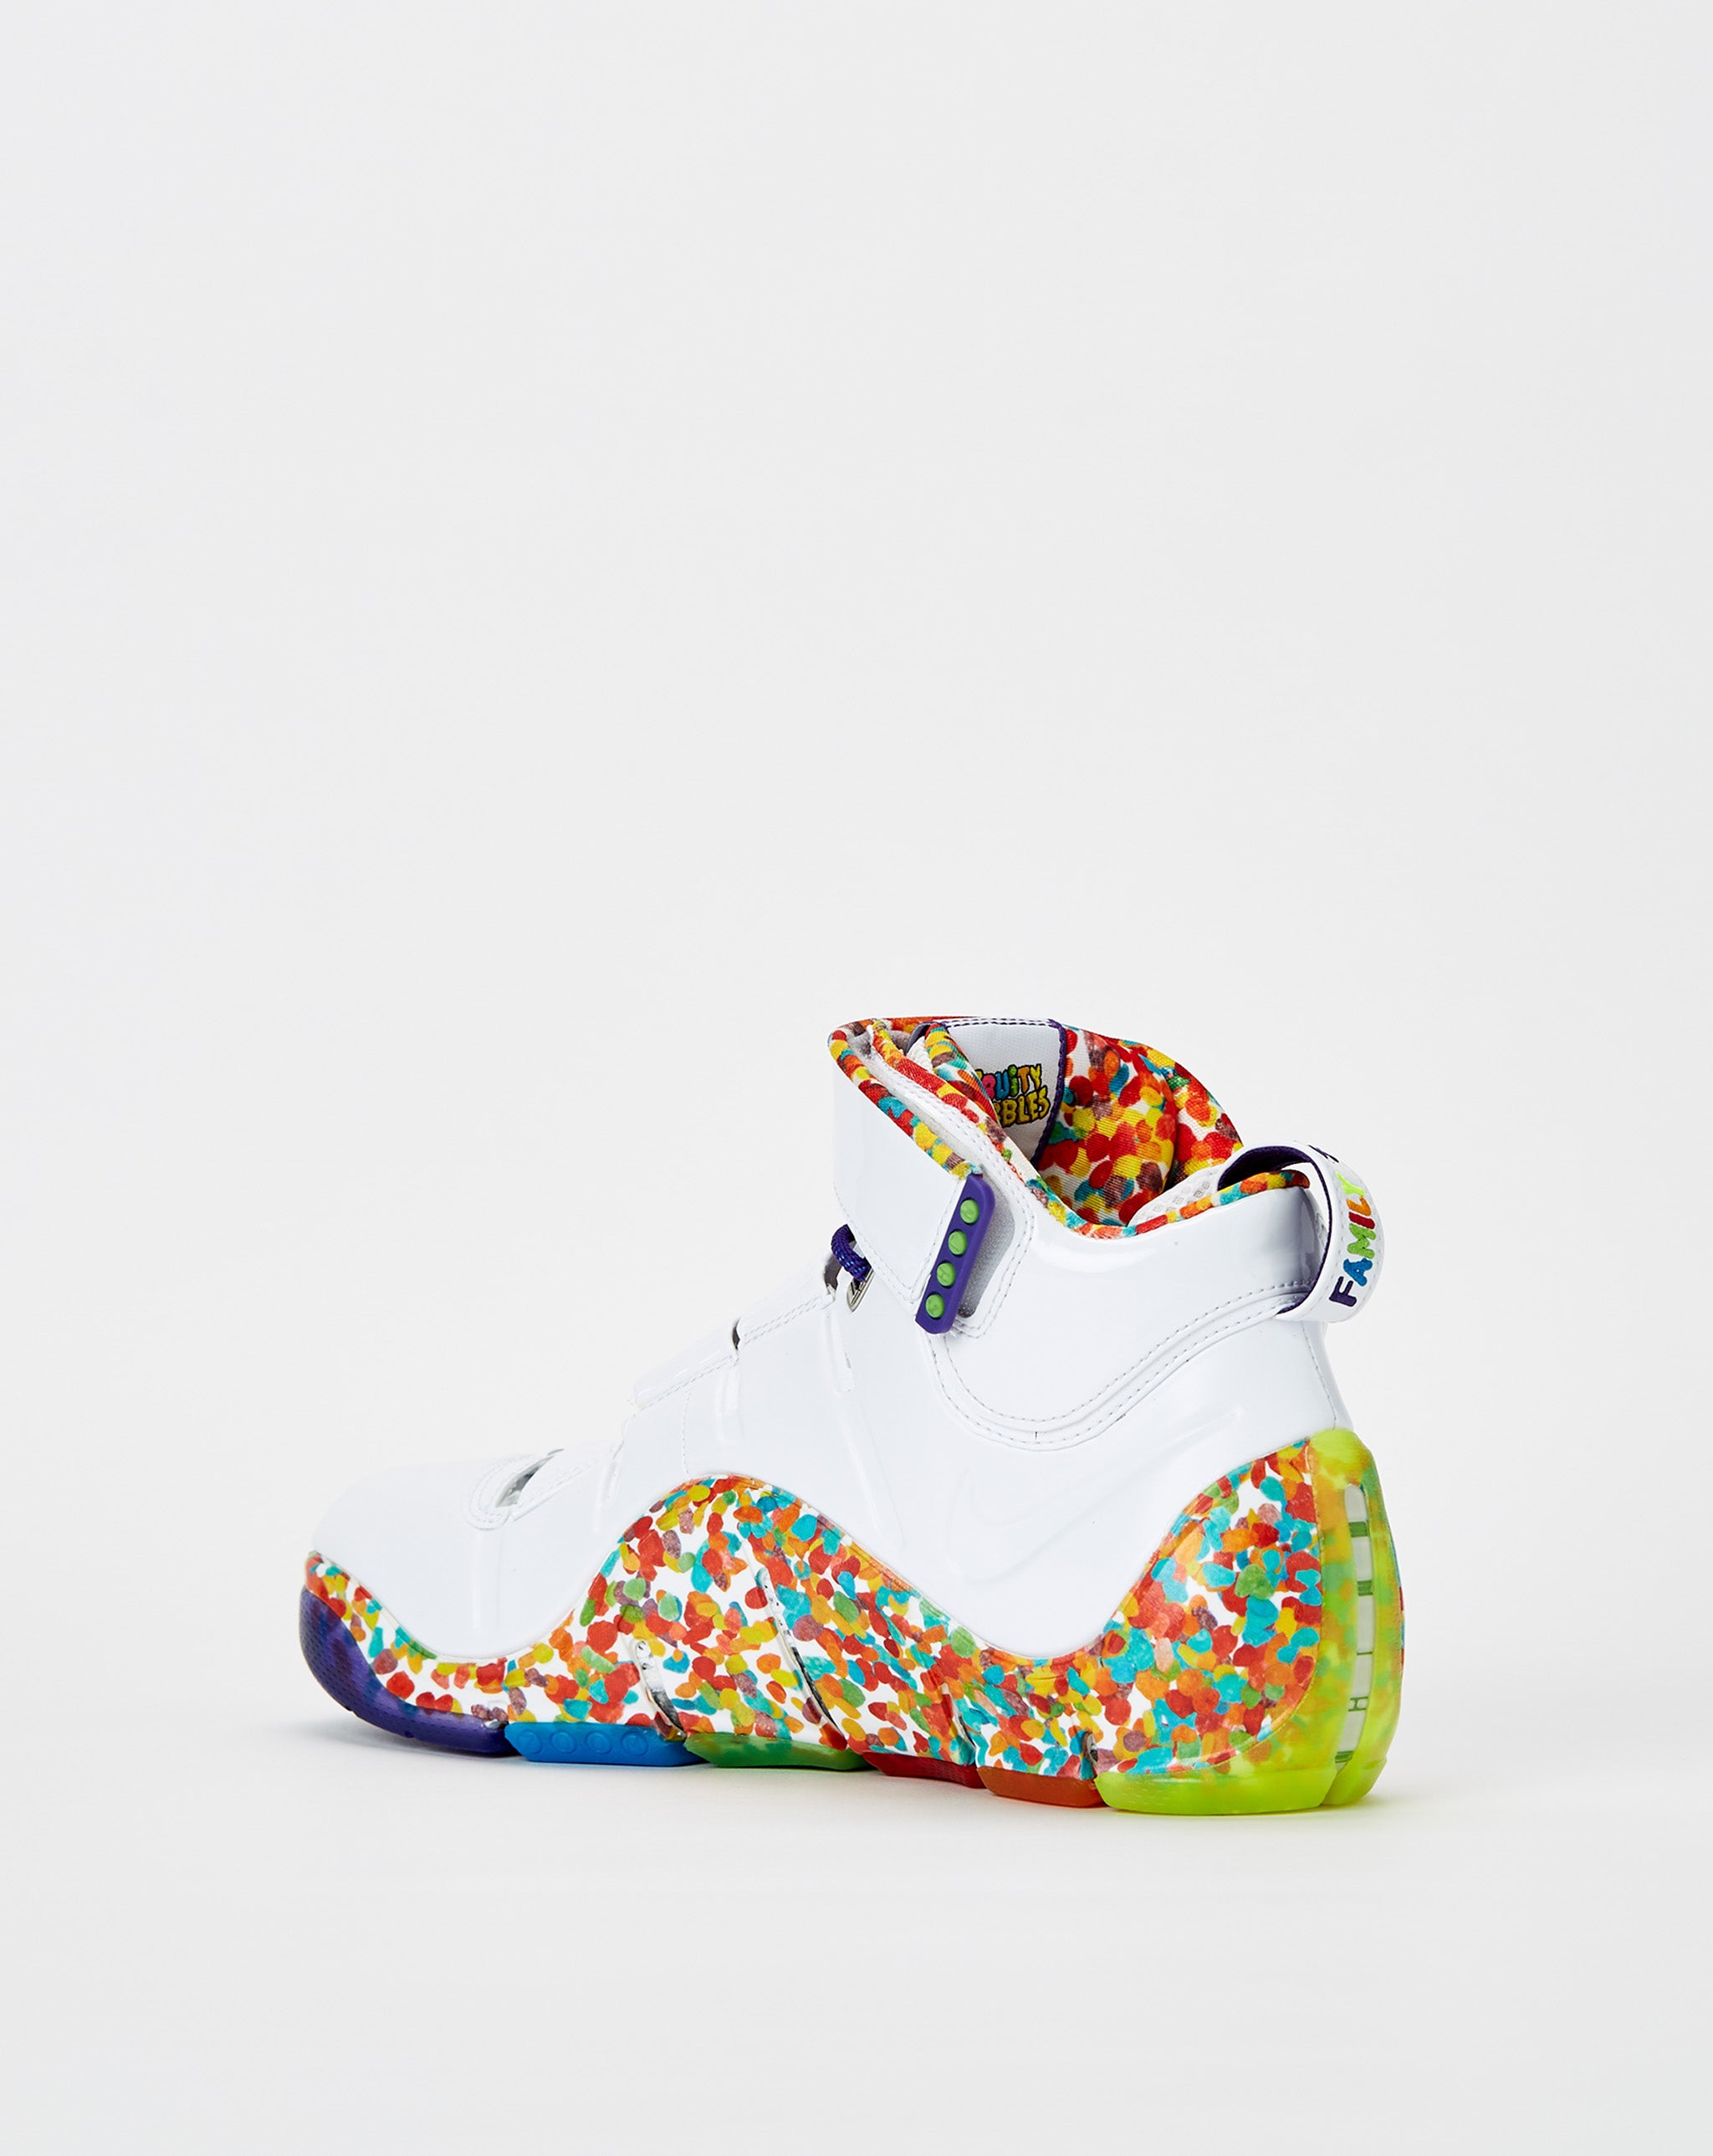 Nike LeBron IV 'Fruity Pebbles'  - Cheap Erlebniswelt-fliegenfischen Jordan outlet